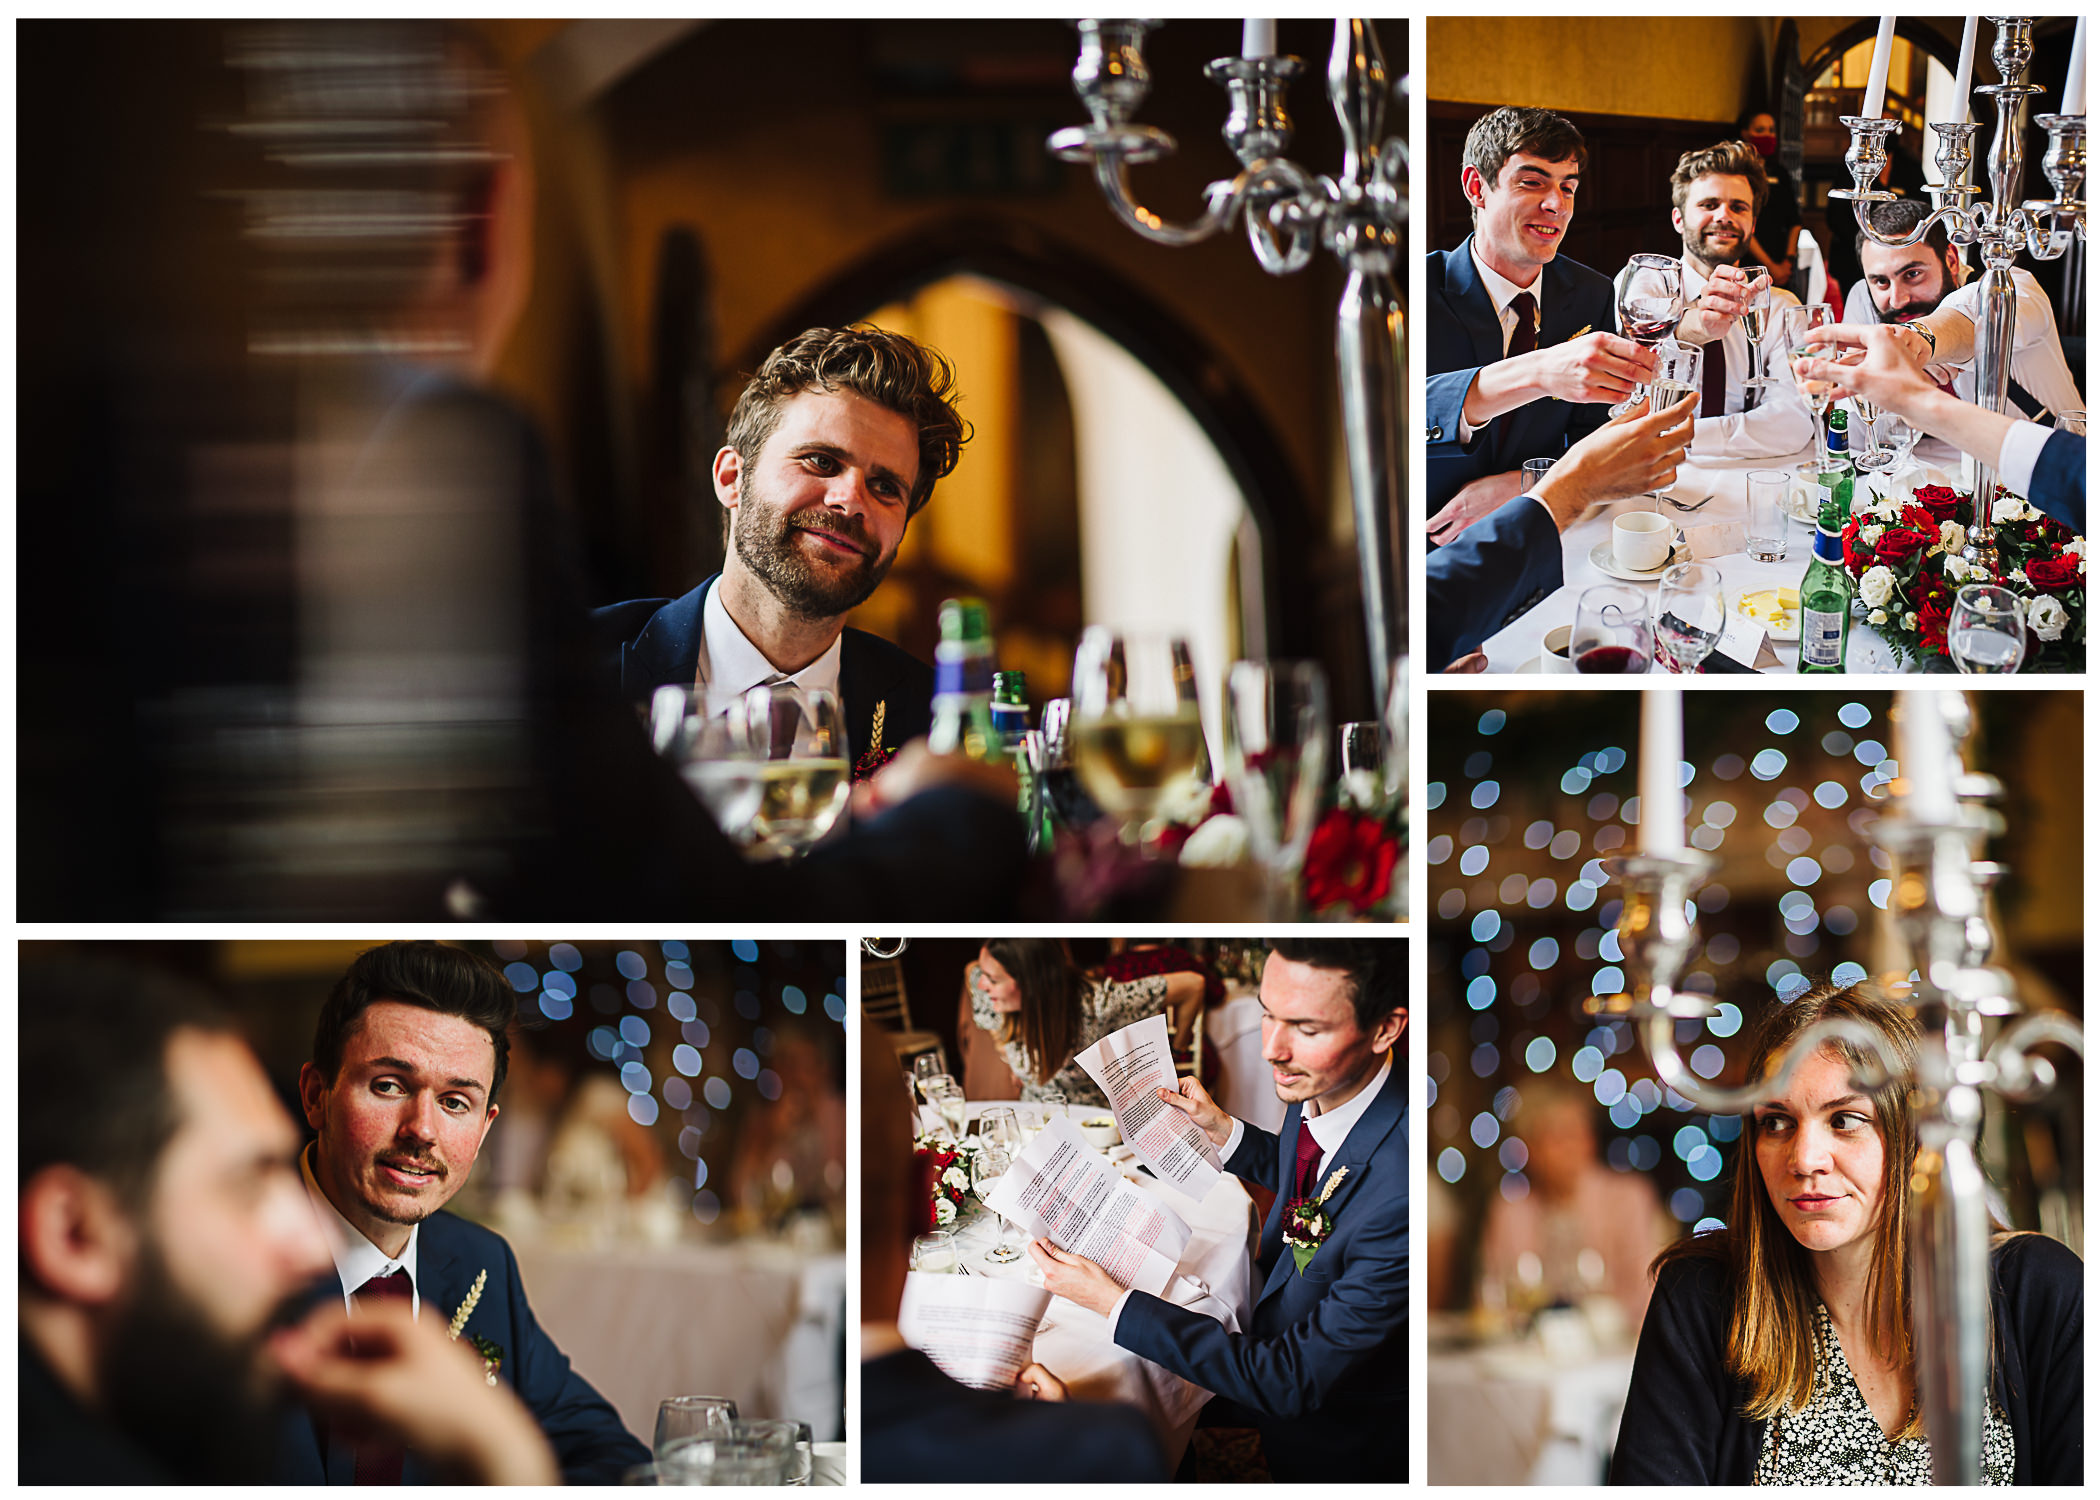 A collage ofwedding reception photos taken by London wedding photographer Denise Slark